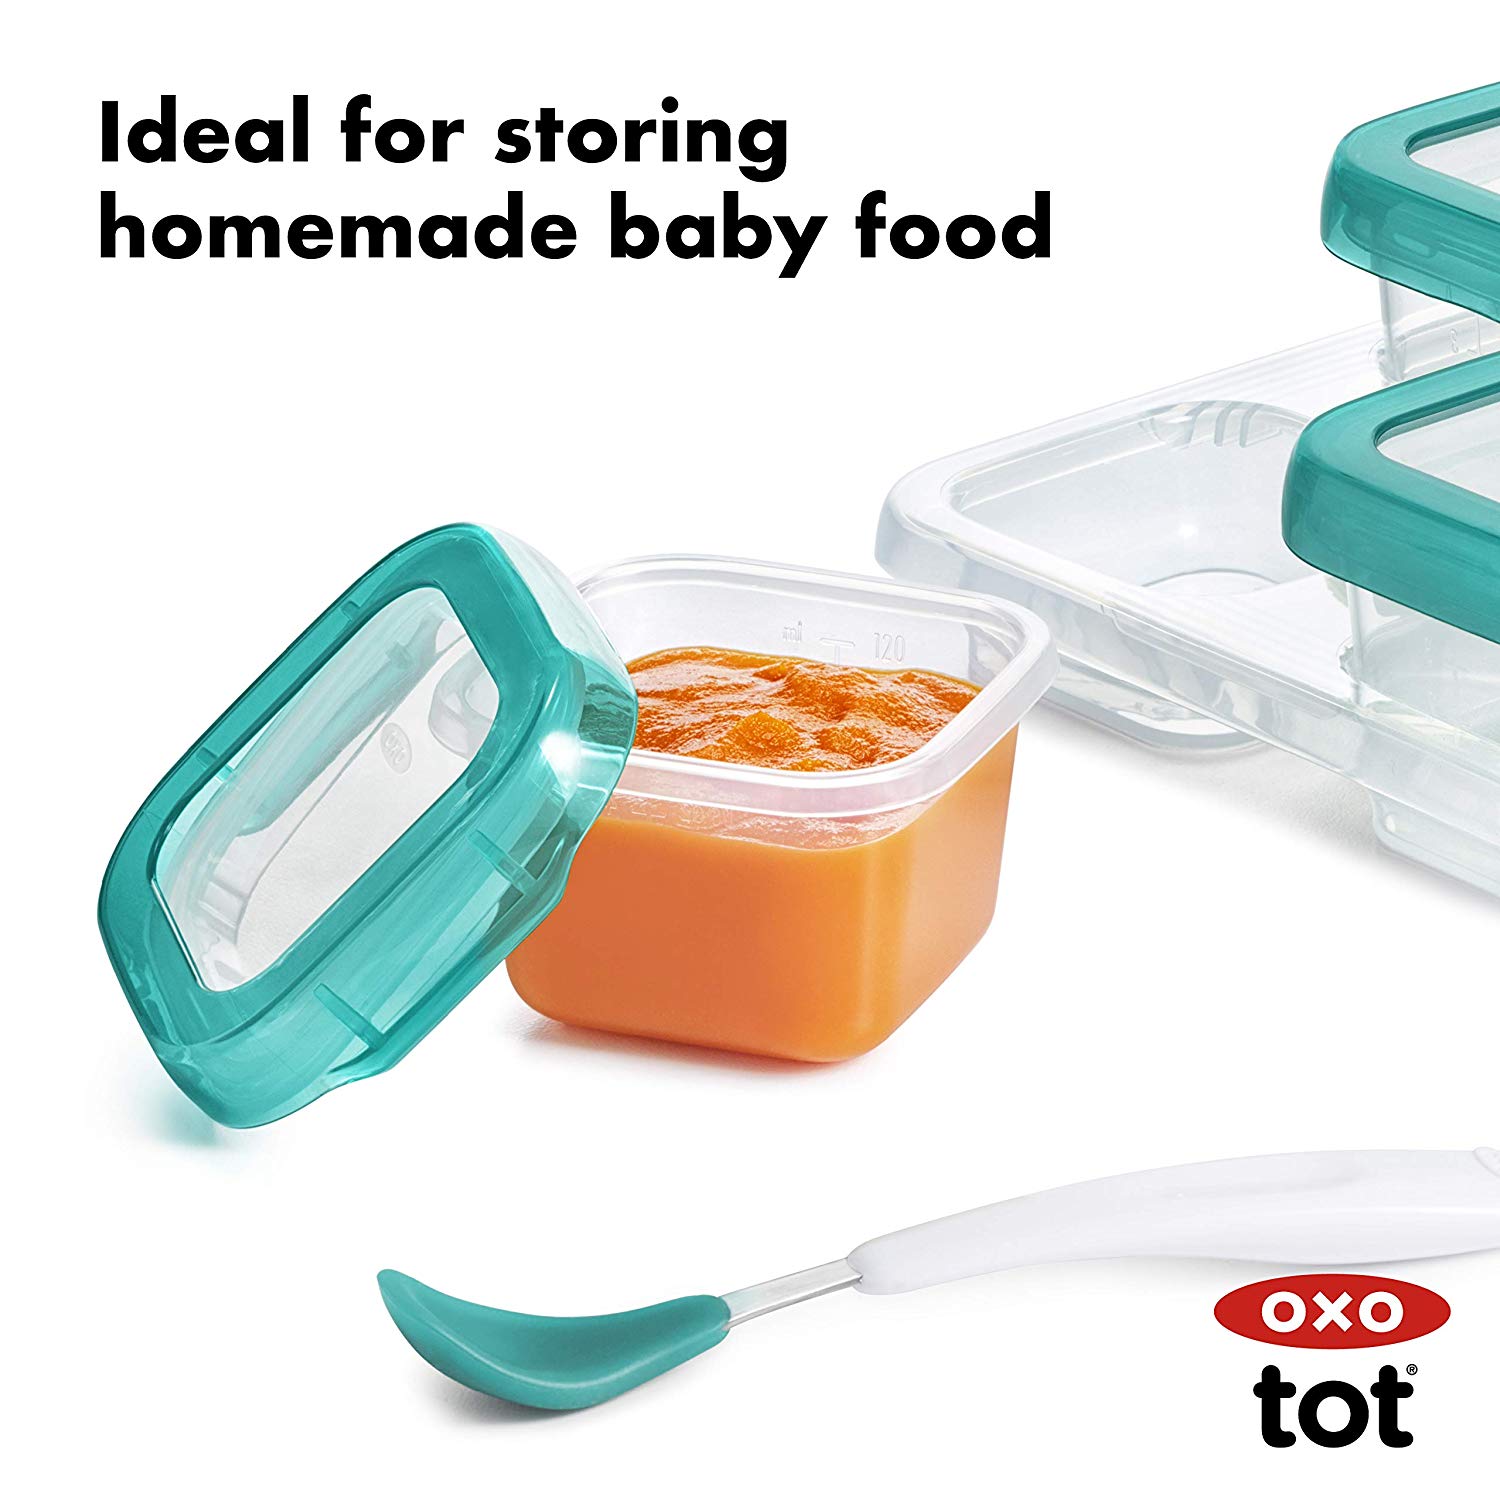 Oxo Tot Glass Baby Storage Blocks 4oz – Bebeang Baby